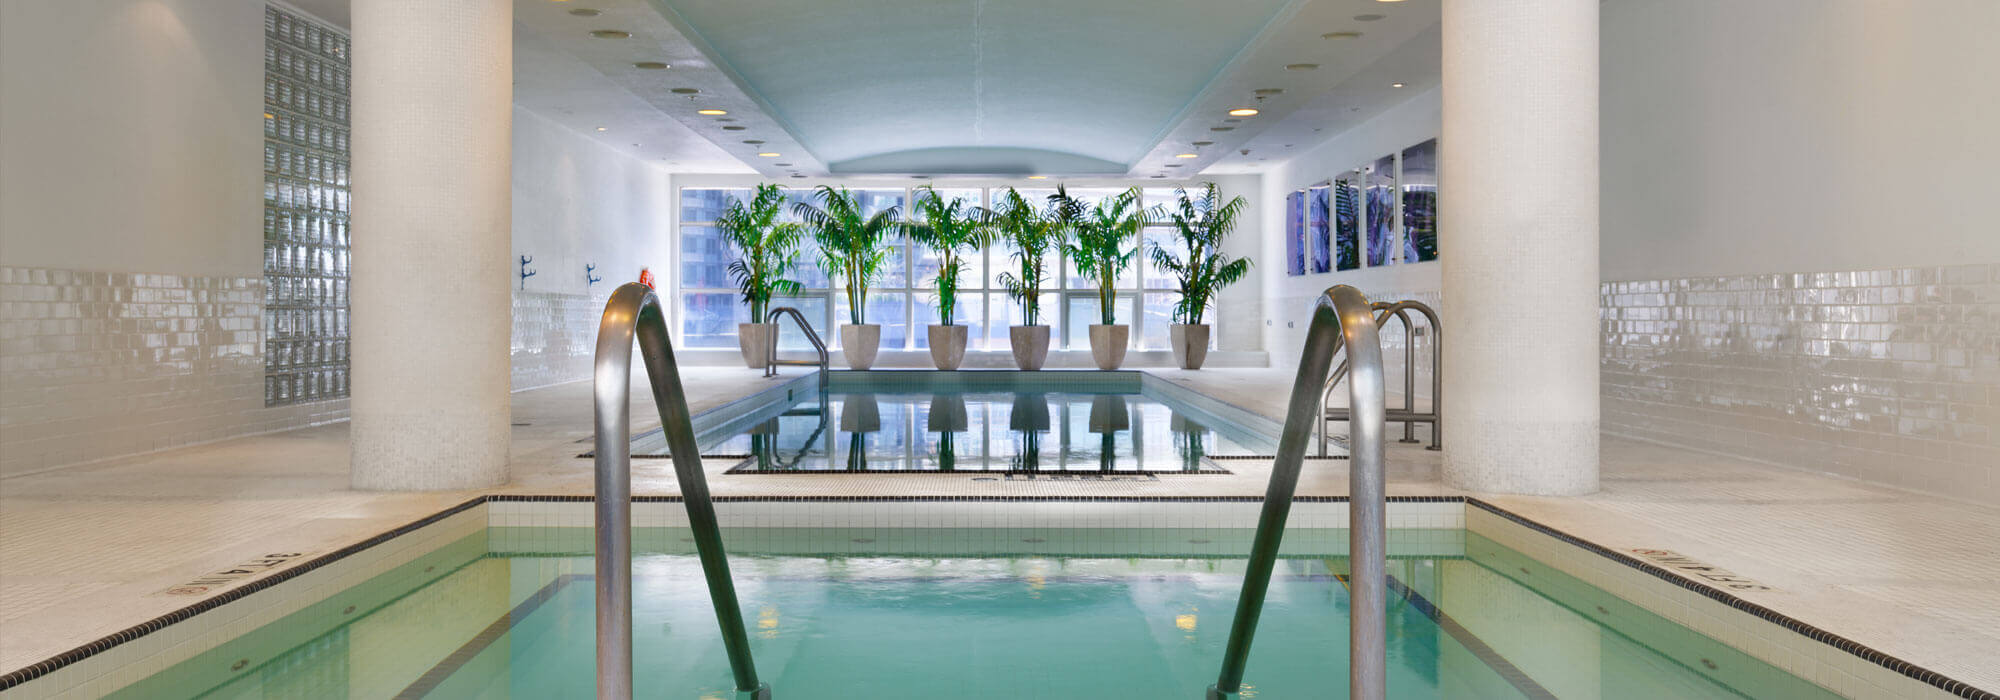 SoHo Hotel amenities renovated health club with lap pool